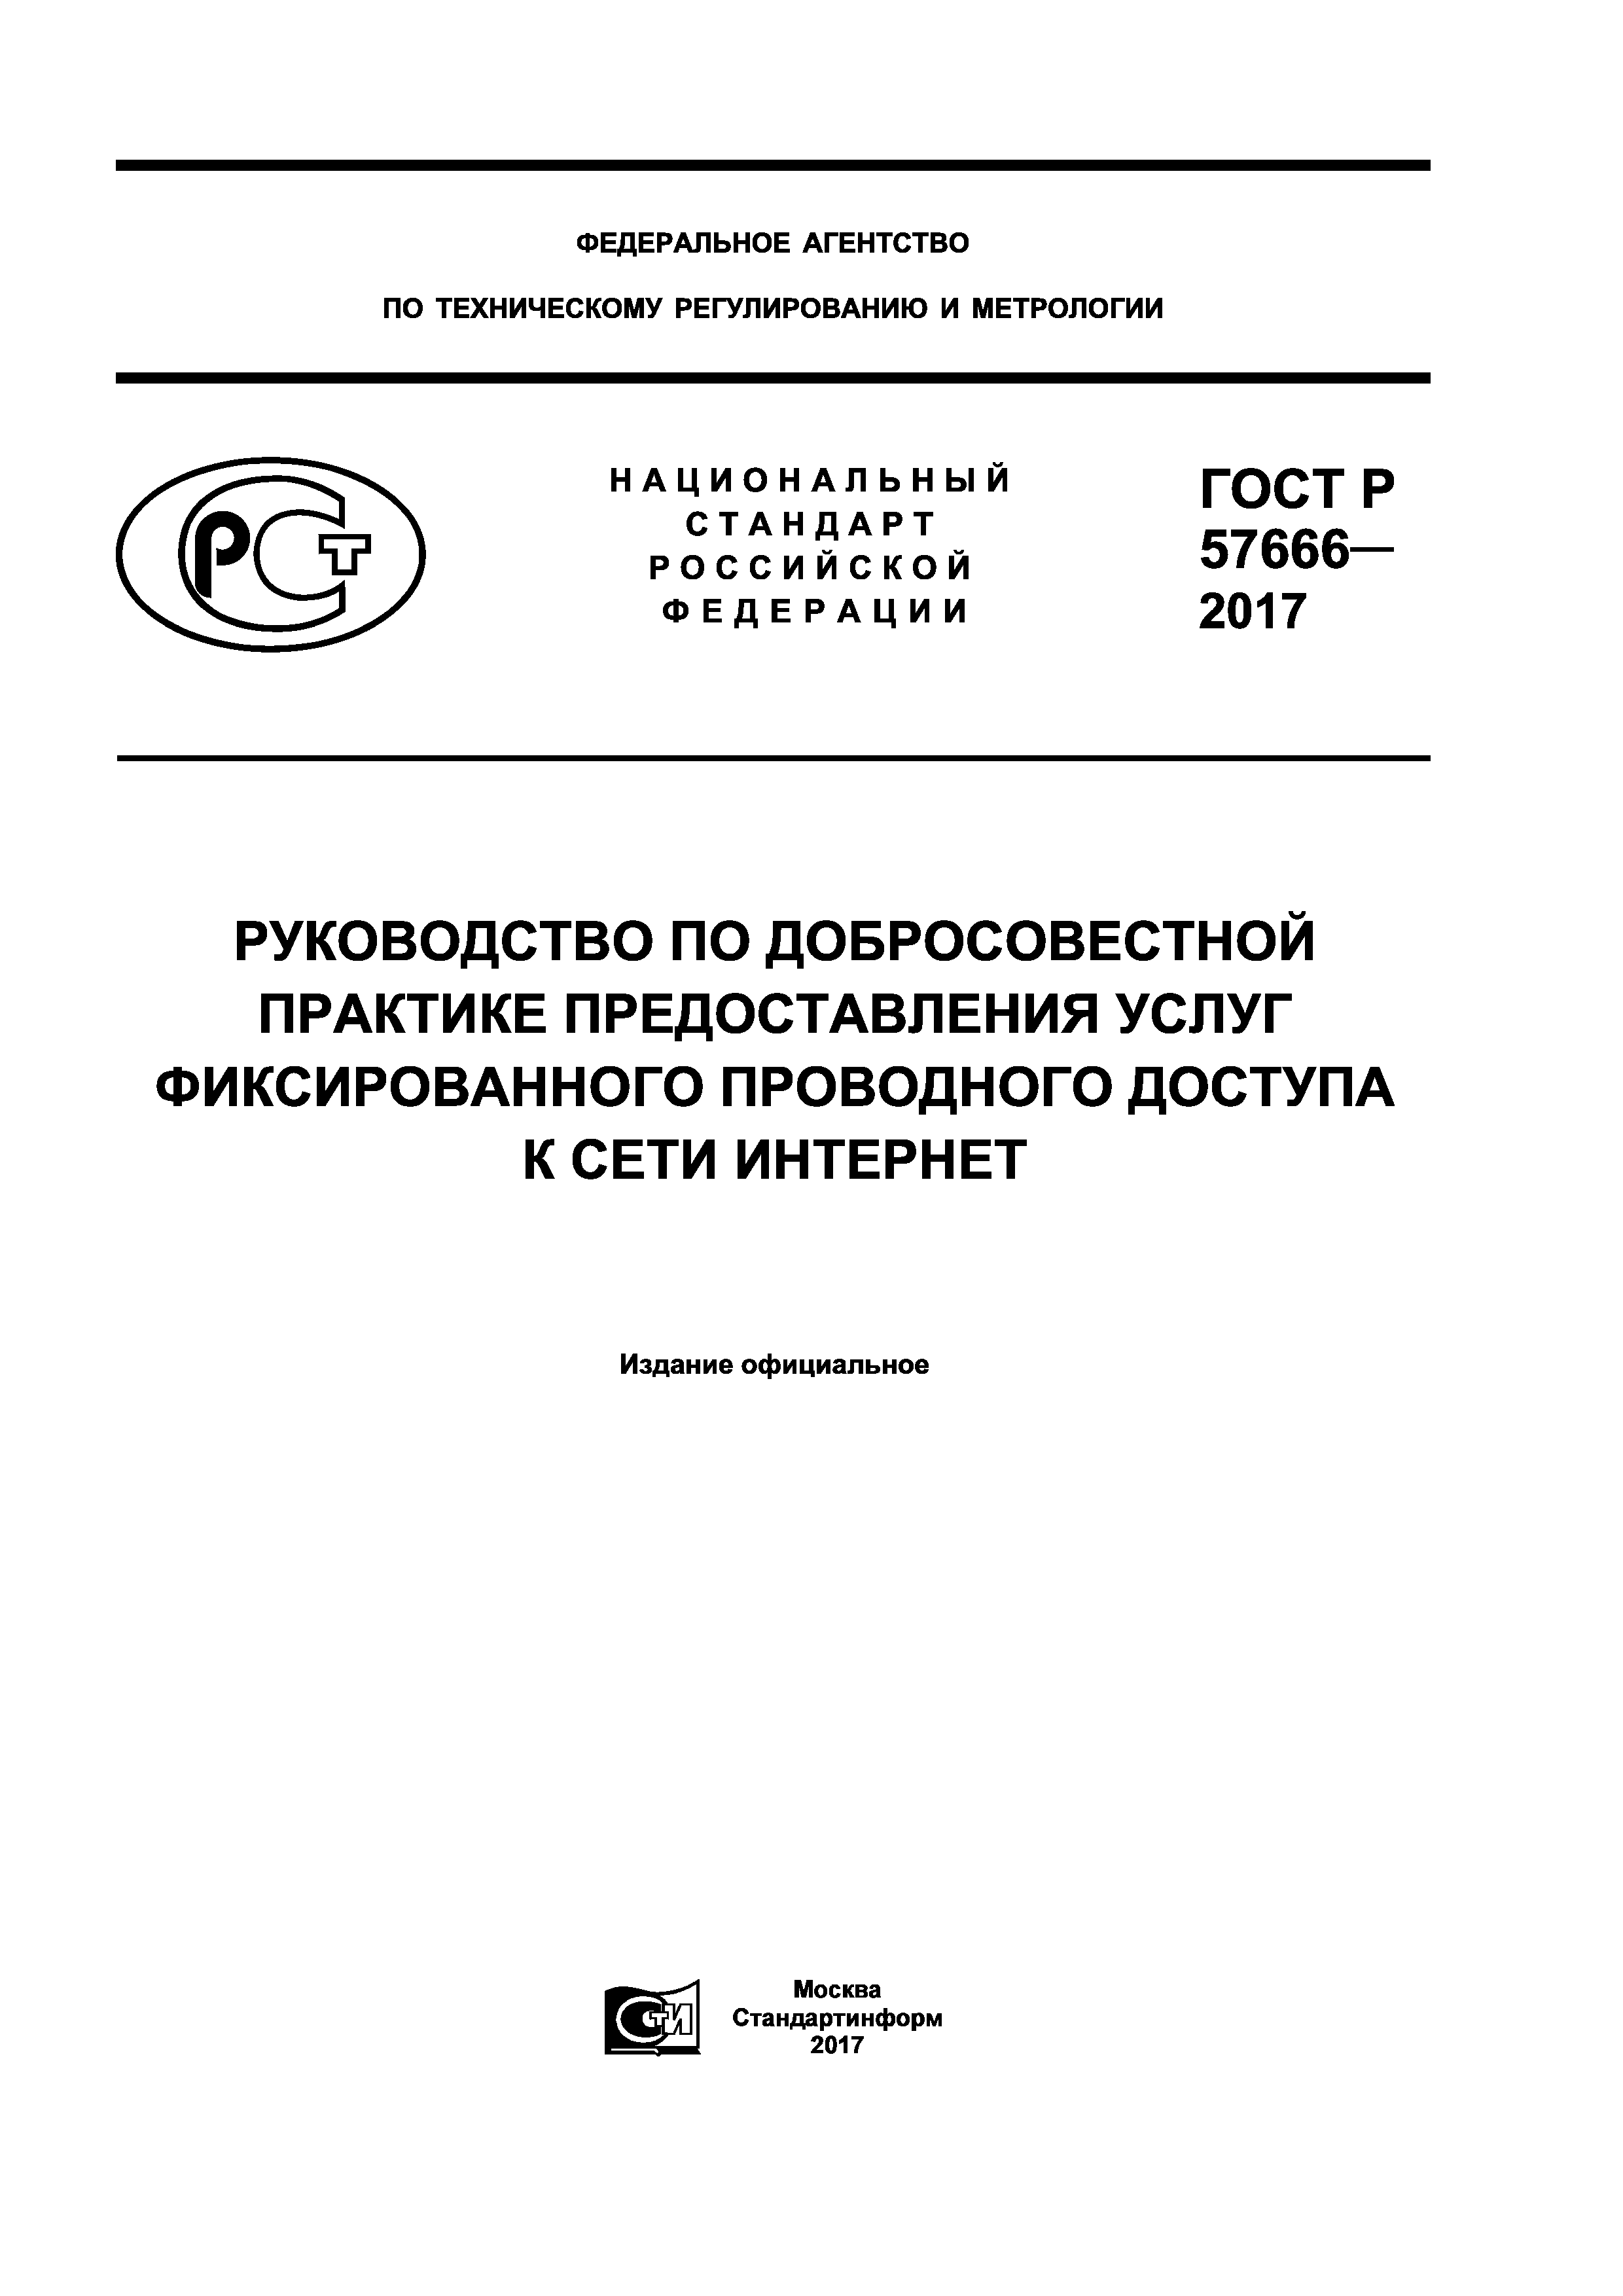 ГОСТ Р 57666-2017